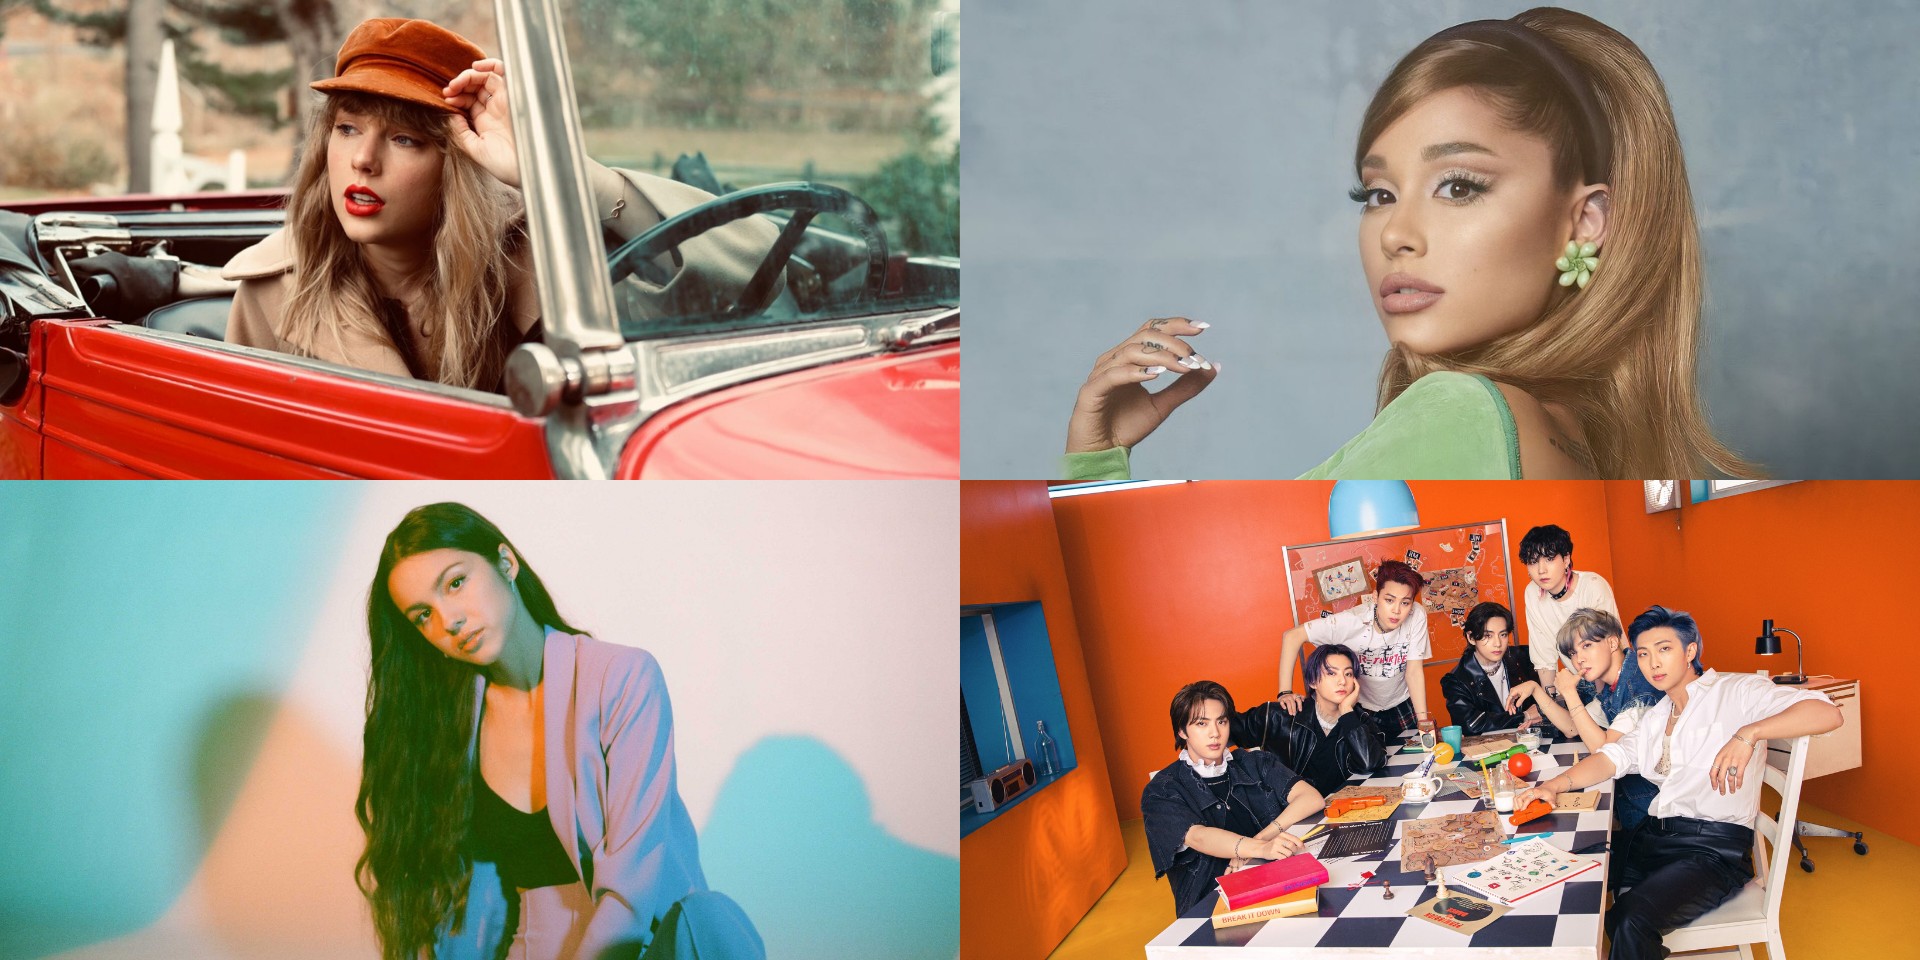 Here are the nominees of Nickelodeon's Kids' Choice Awards 2022 — BTS, Ariana Grande, Olivia Rodrigo, Taylor Swift, and more